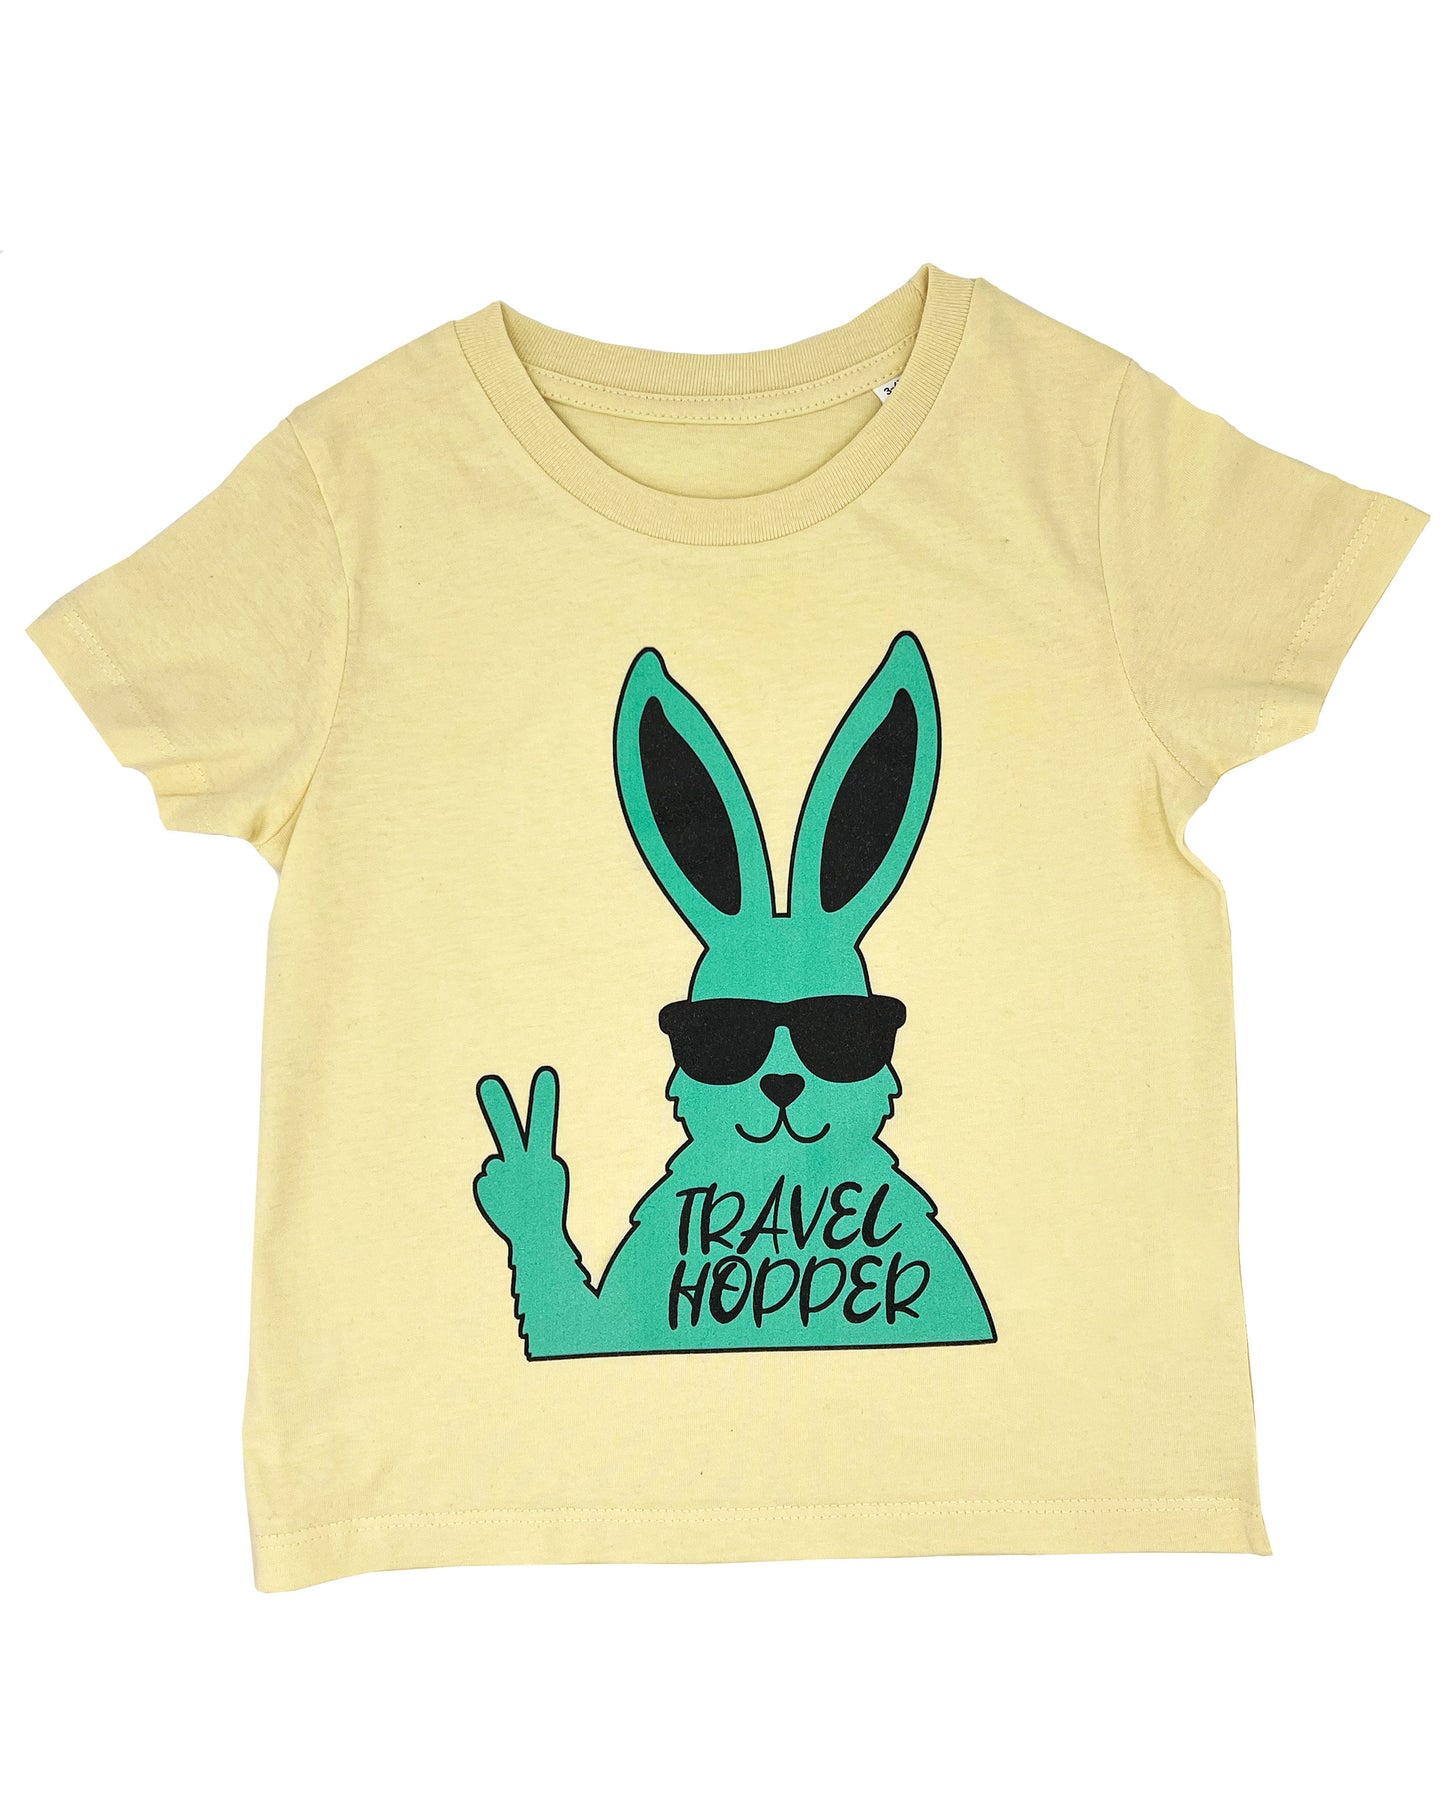 TRAVEL HOPPER- Easter Baby and Kids Short Sleeve T Shirt - Little Mate Adventures